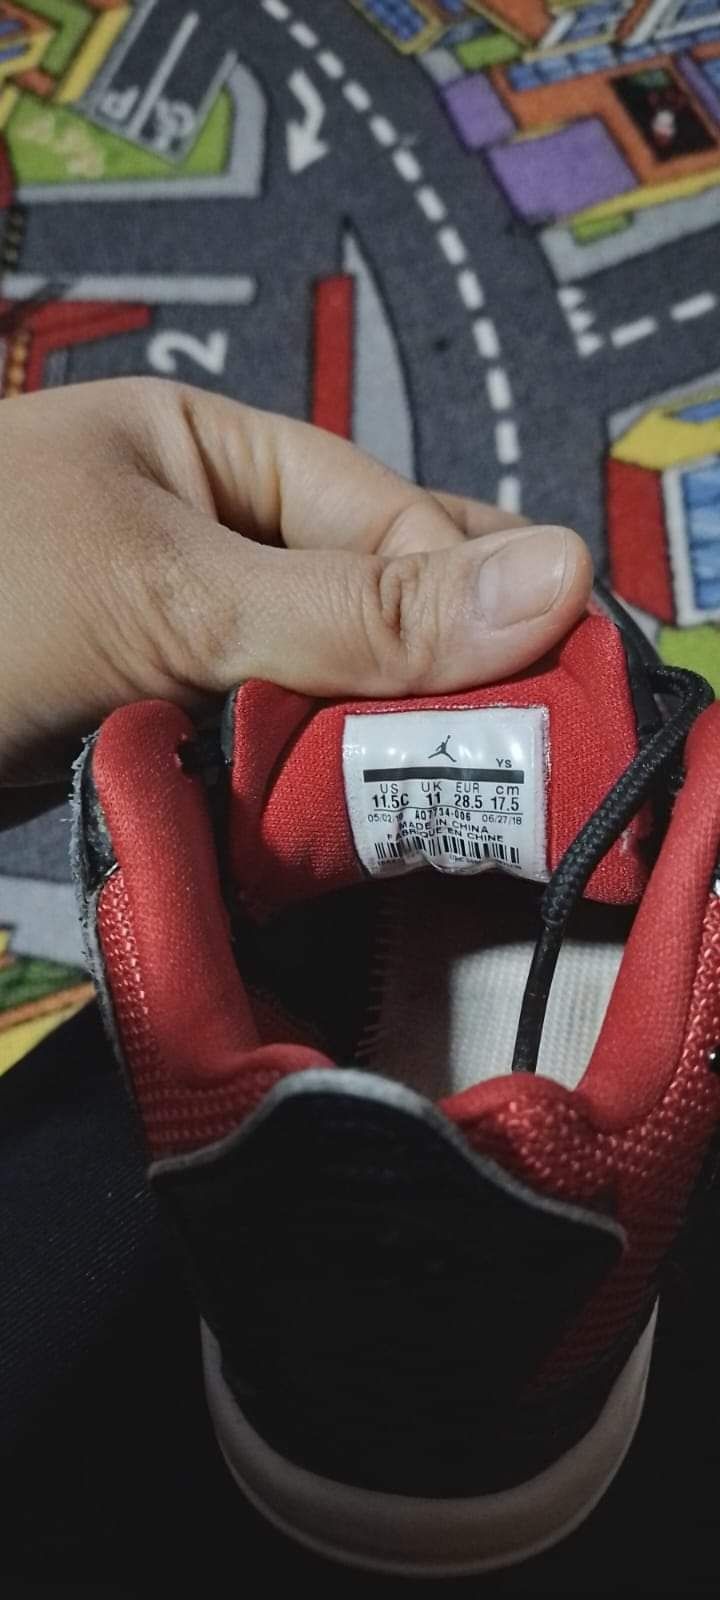 Adidas Jordan originali